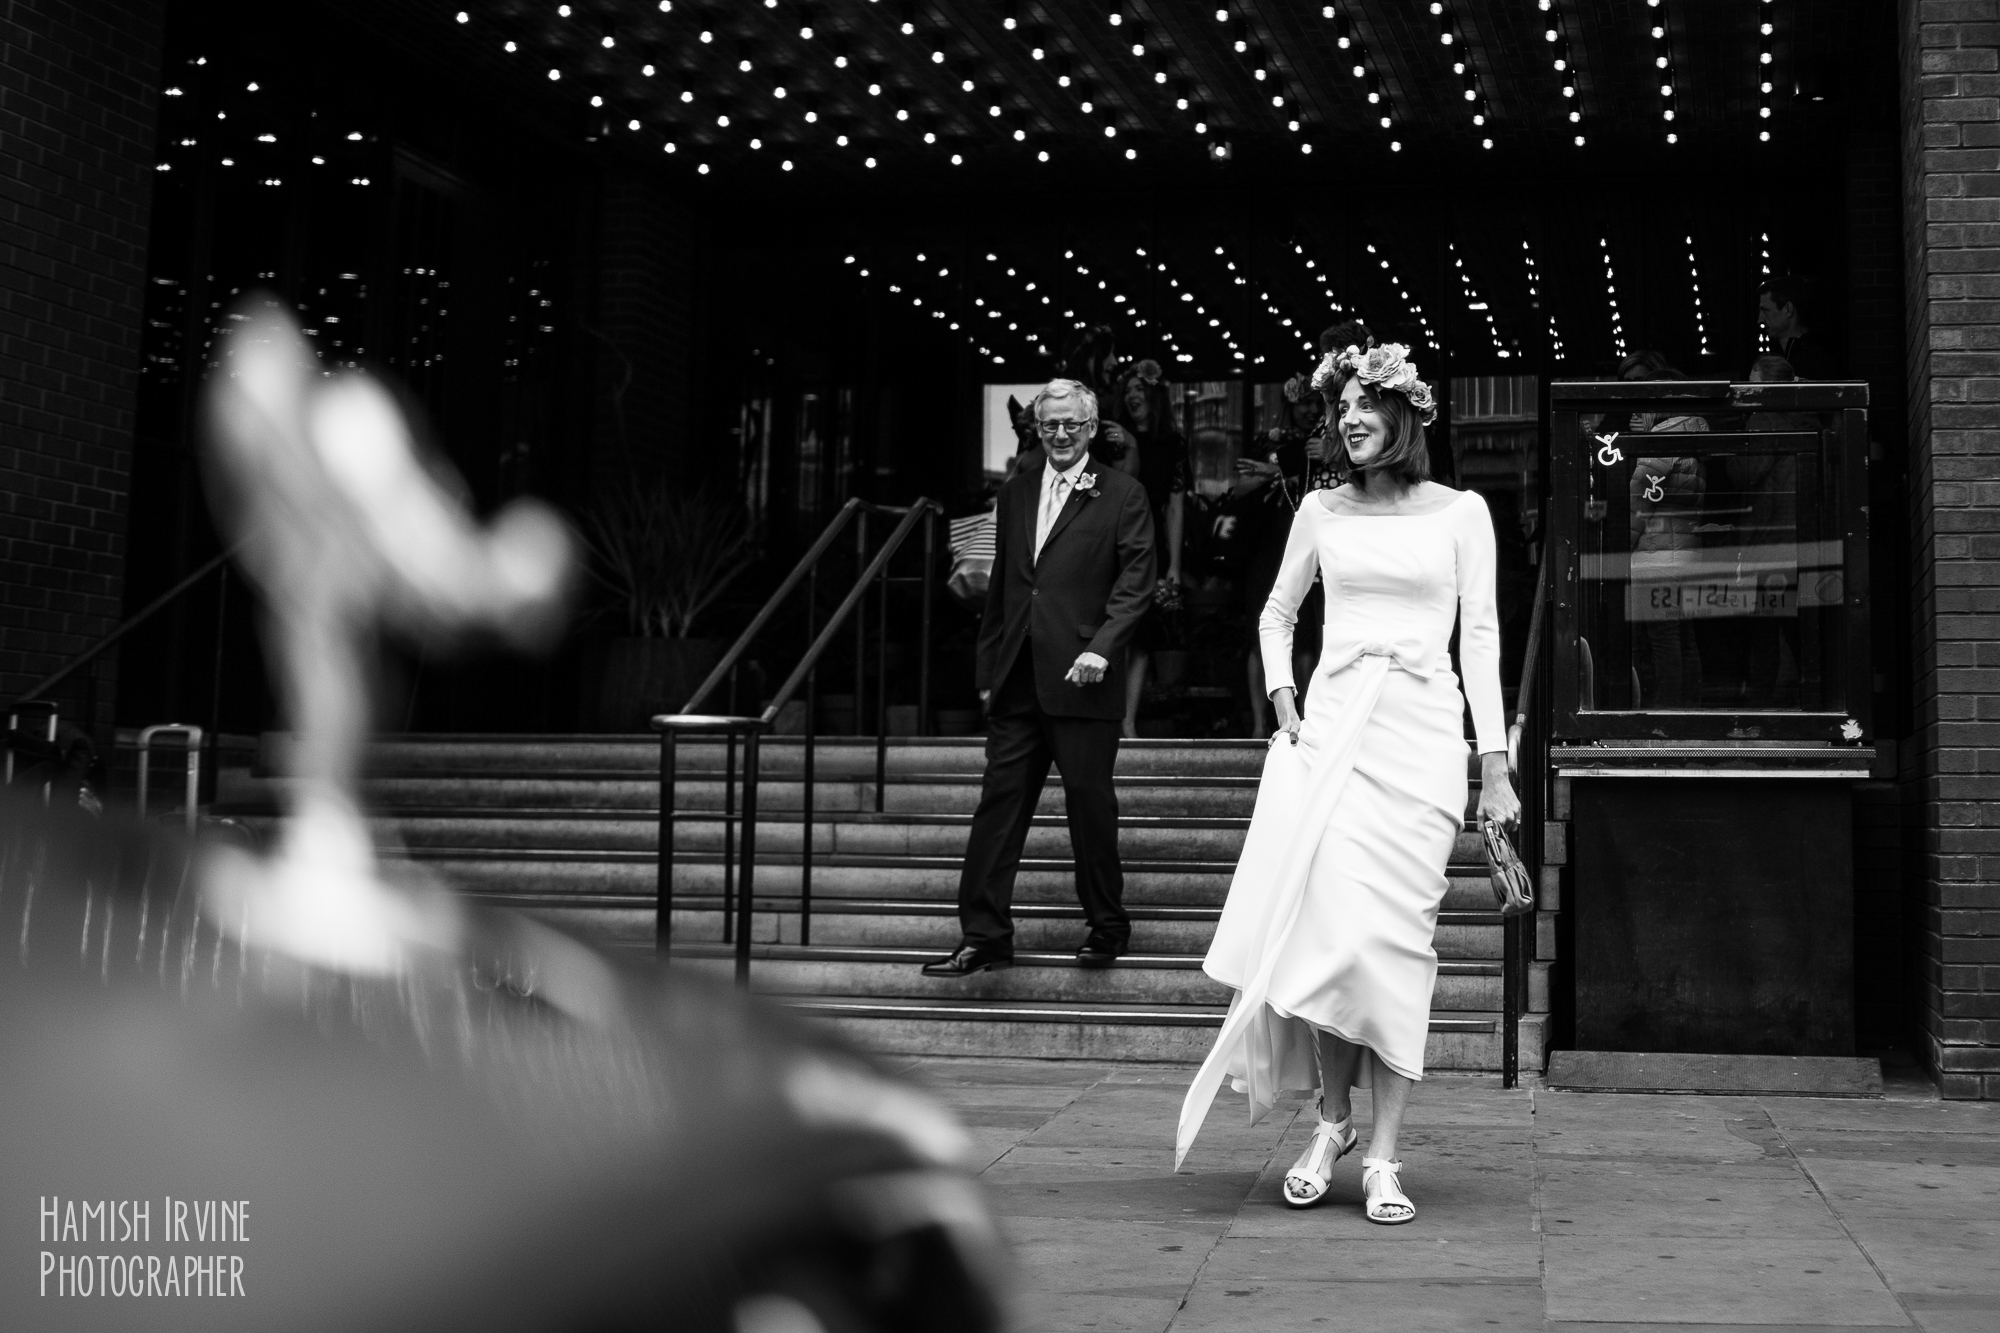 Hamish Irvine Photography, photographer, London wedding photographer, Asylum chapel, Drift Bar, Katie and Nate's wedding, 